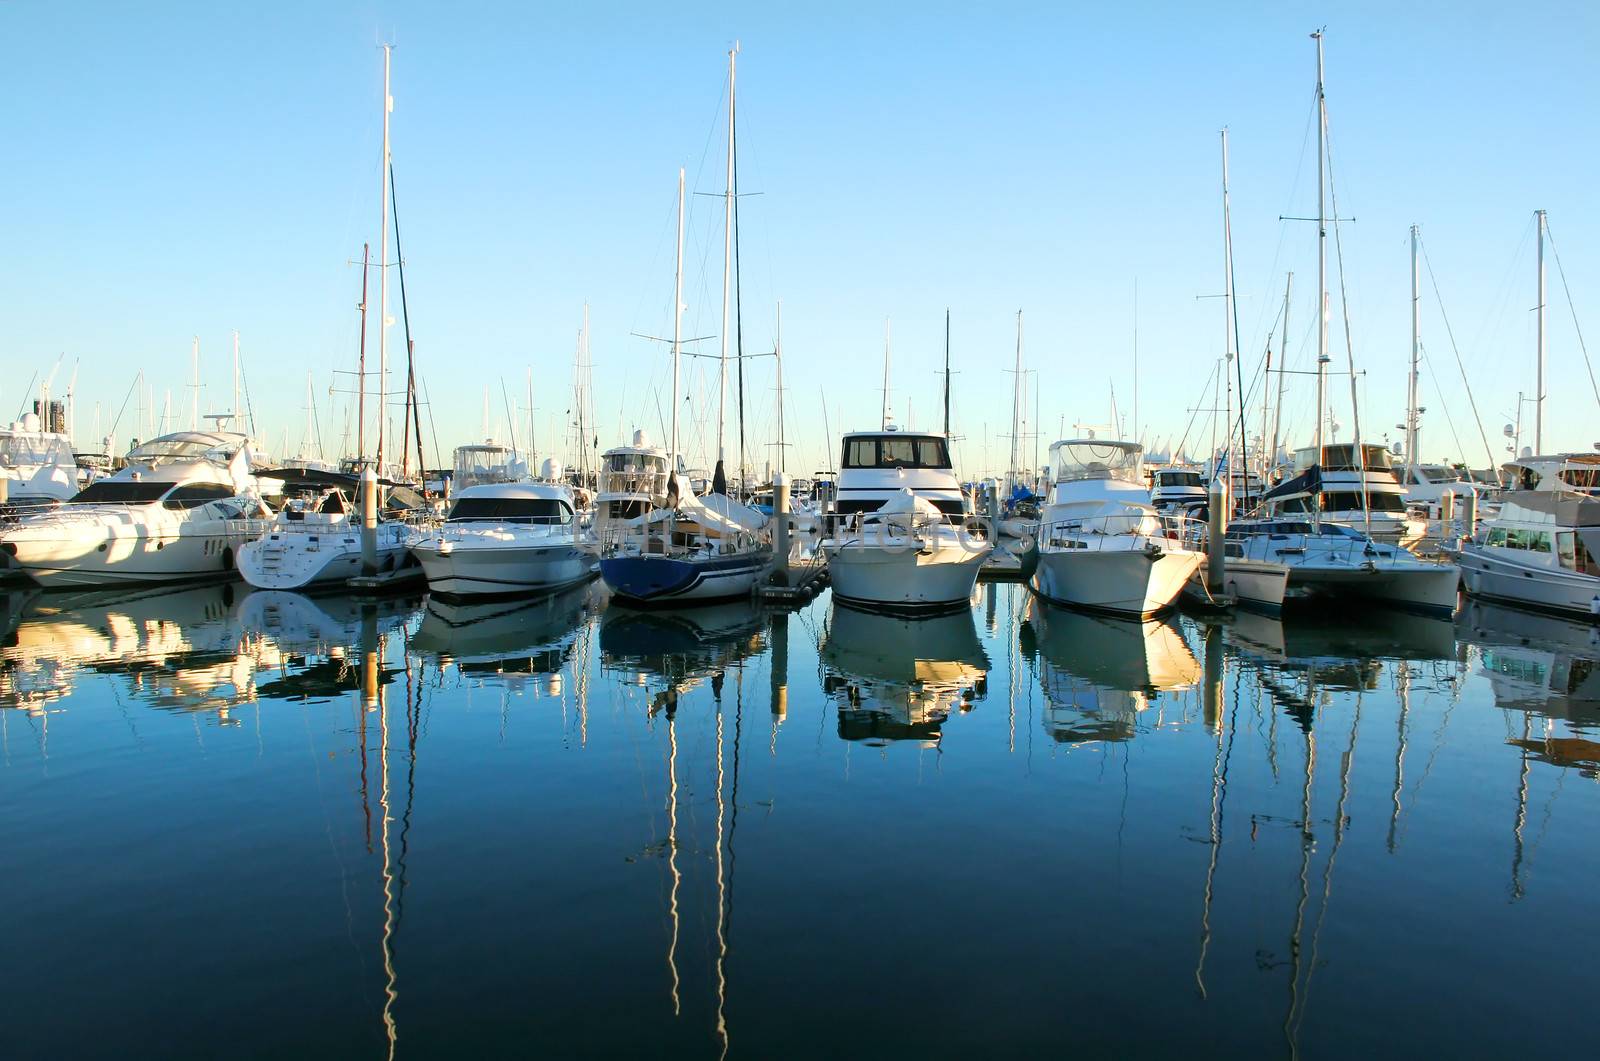 Expensive yachts and boats lined up at the marina at daybreak.